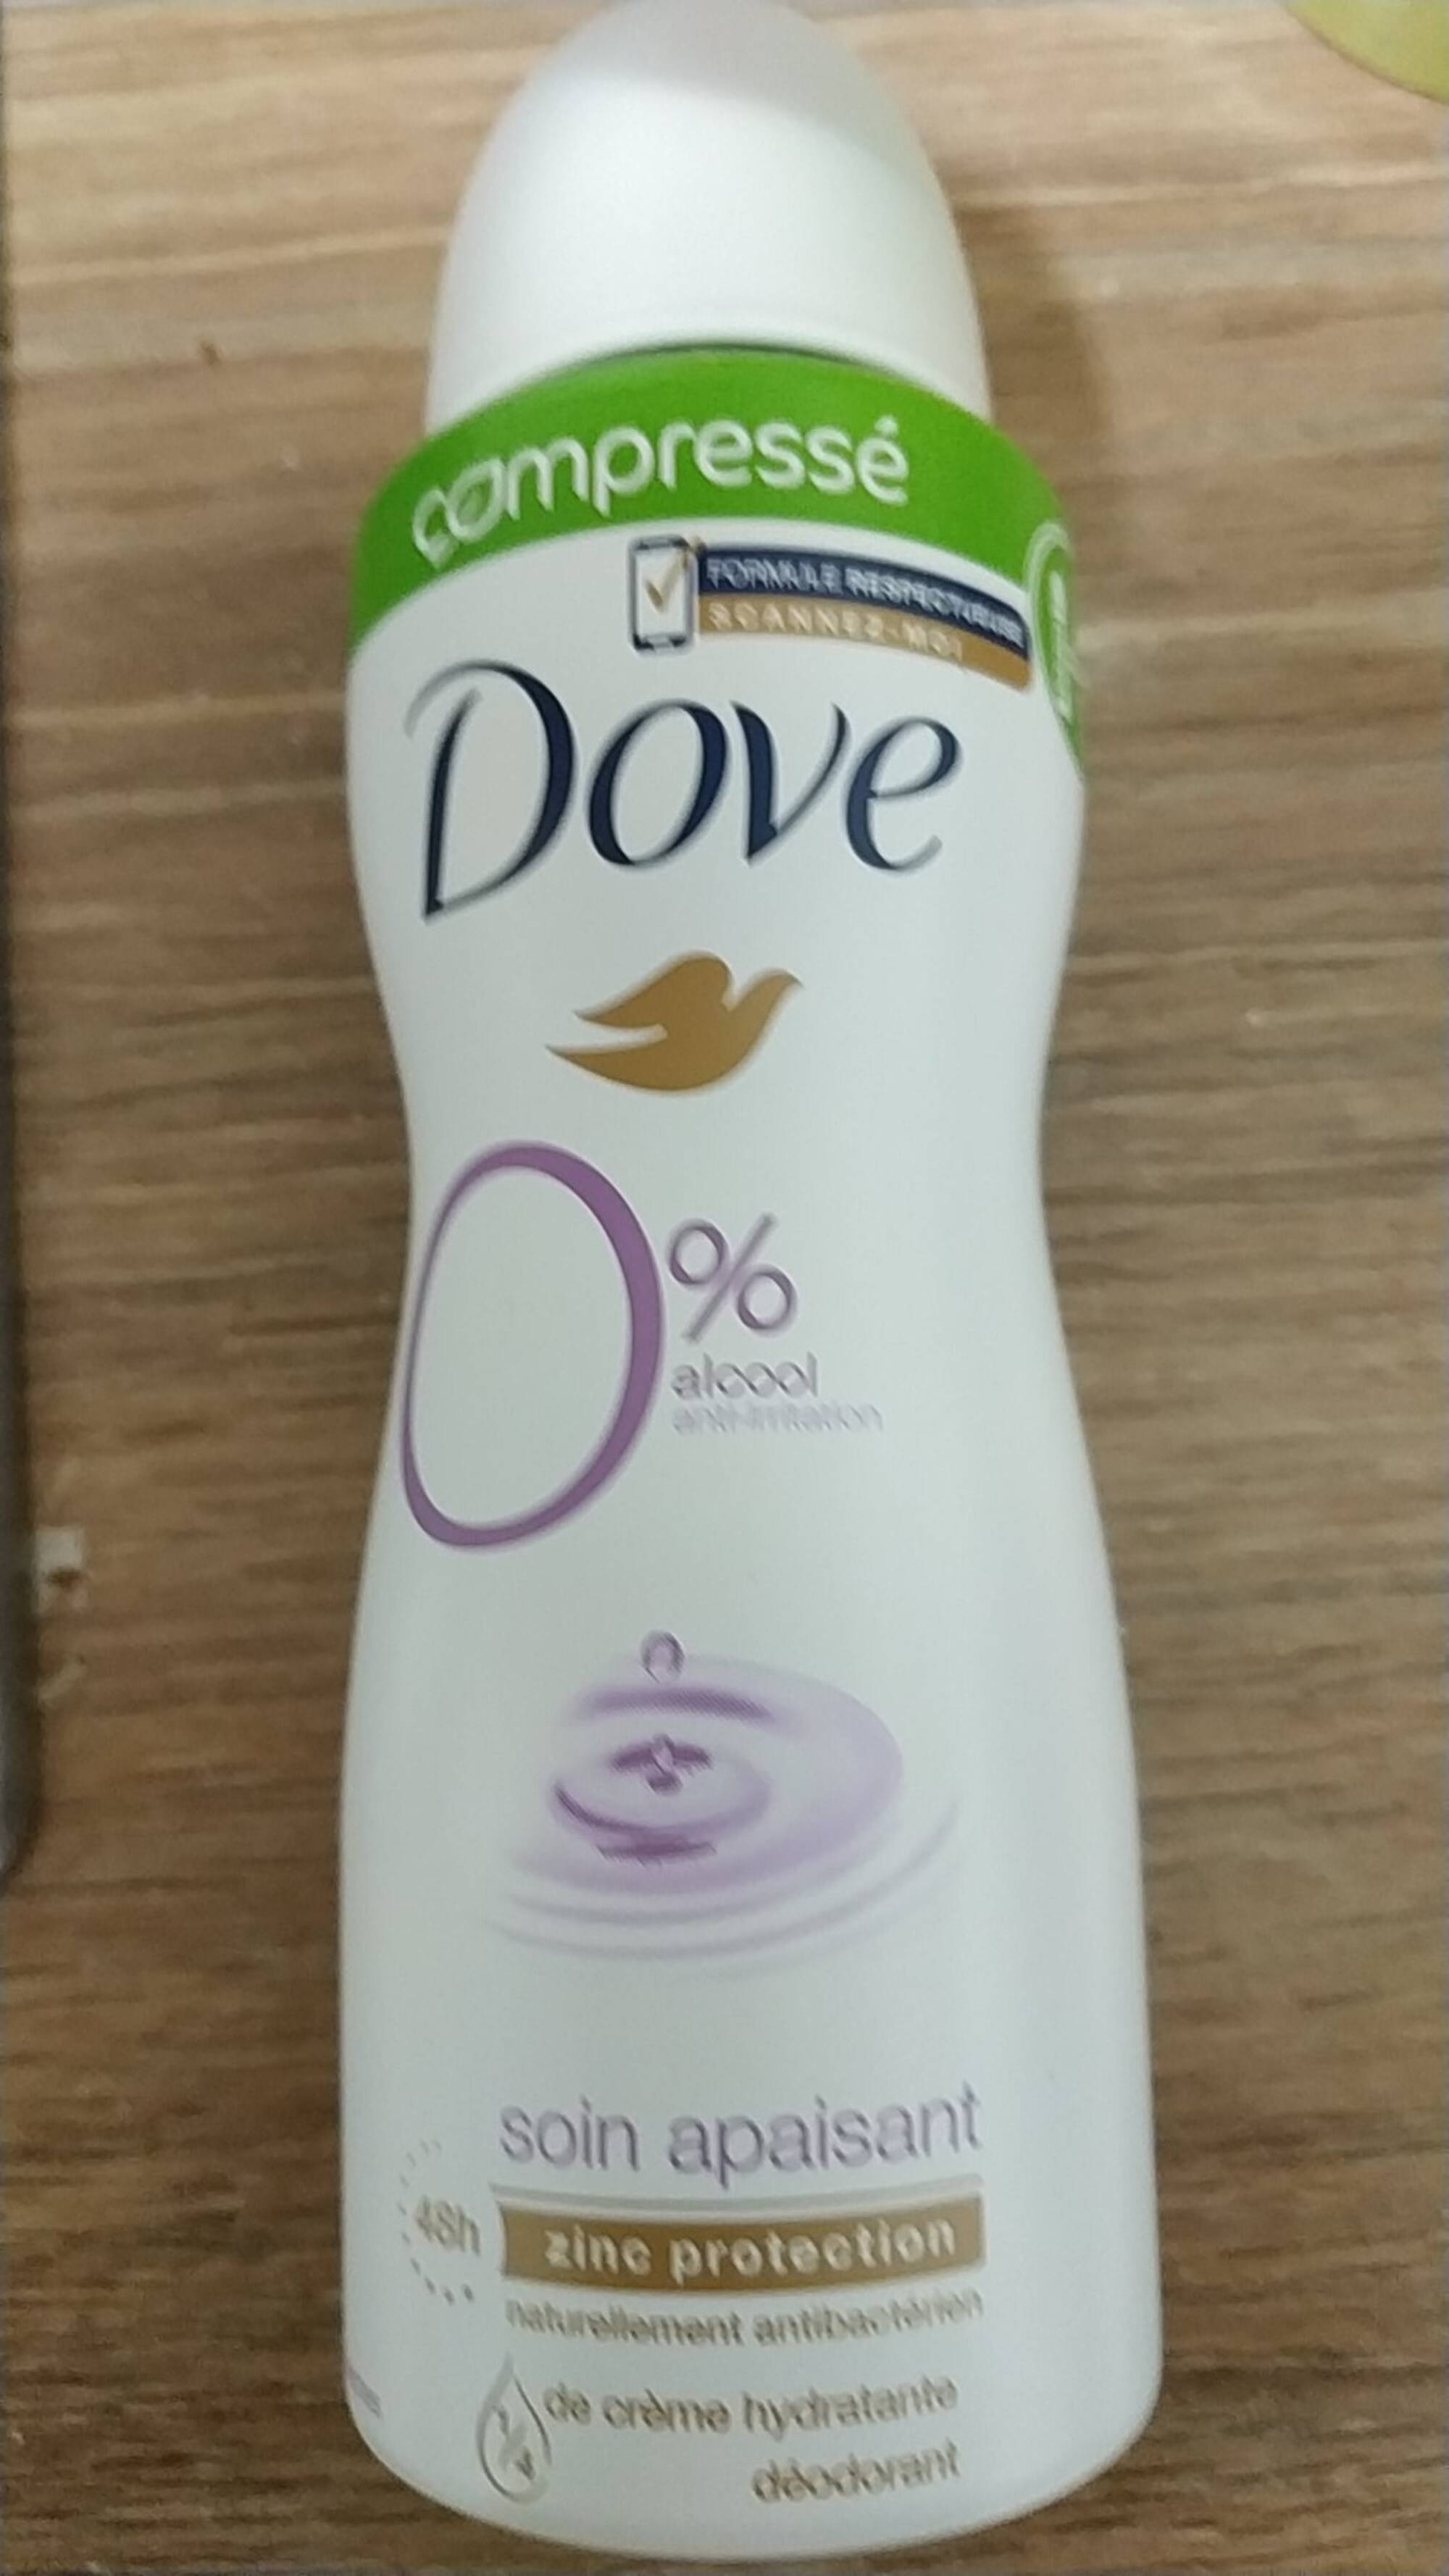 DOVE - 0% alcool - Déodorant 48h